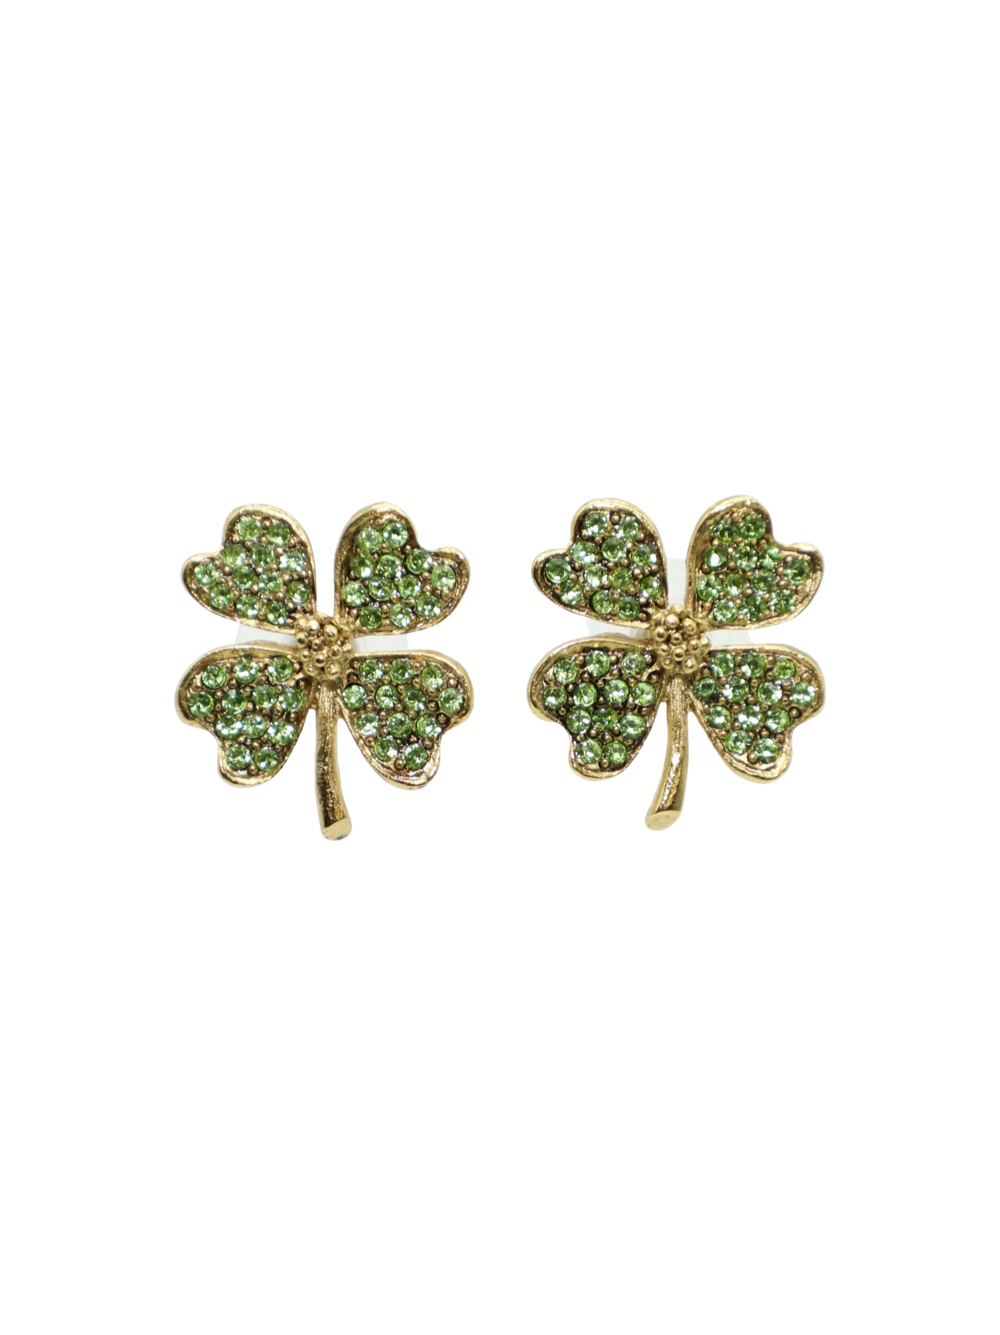 Oscar de la Renta Crystal Four Leaf Clover Stud Earrings (More Colors)